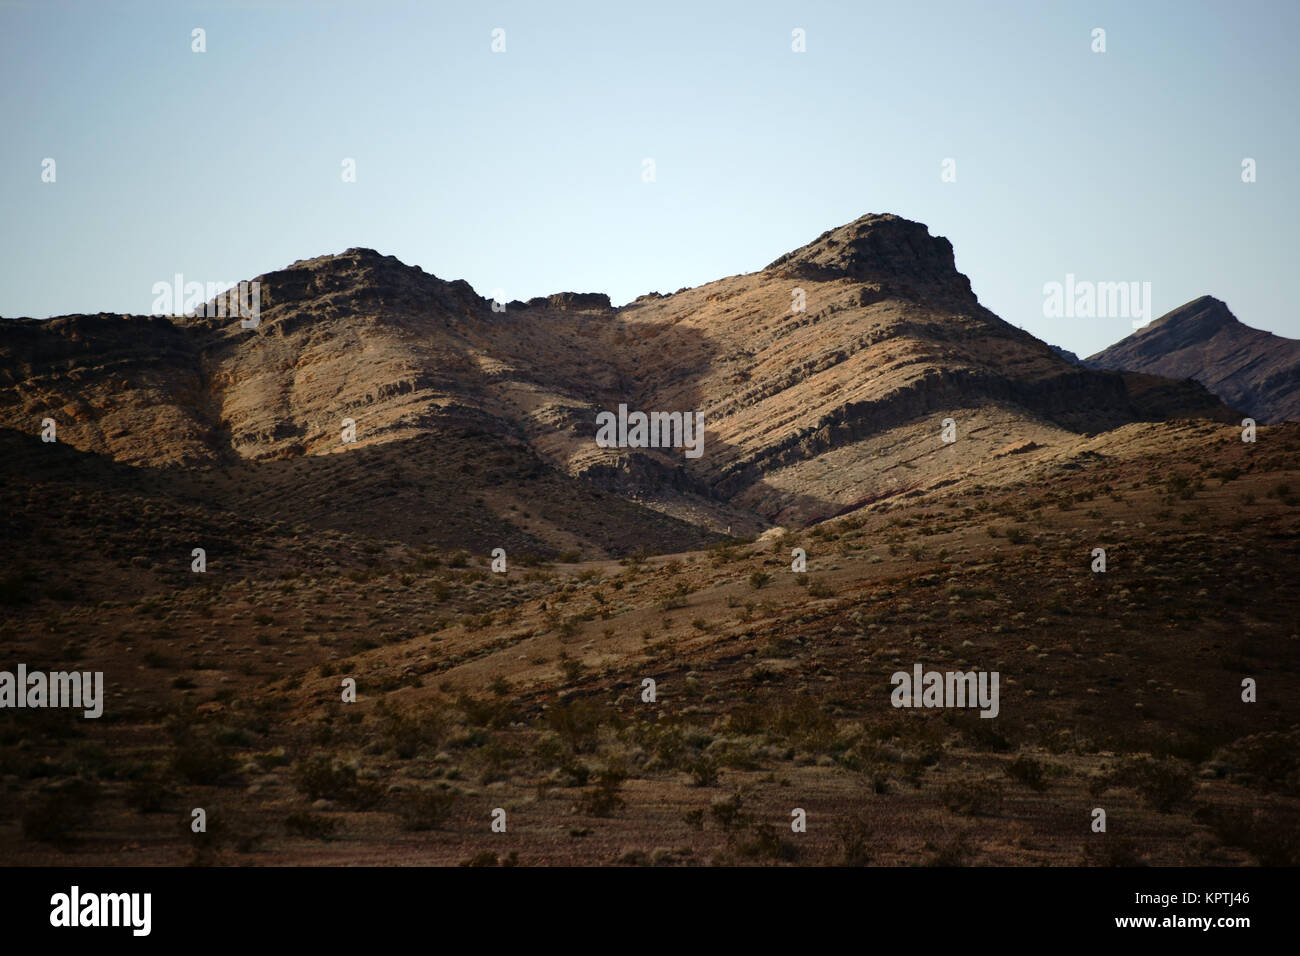 Sandförmige geschichtete und Felsformationen dans der ancien Wüste Mojave in der Nähe der Kreuzung Vallée de la mort. Banque D'Images